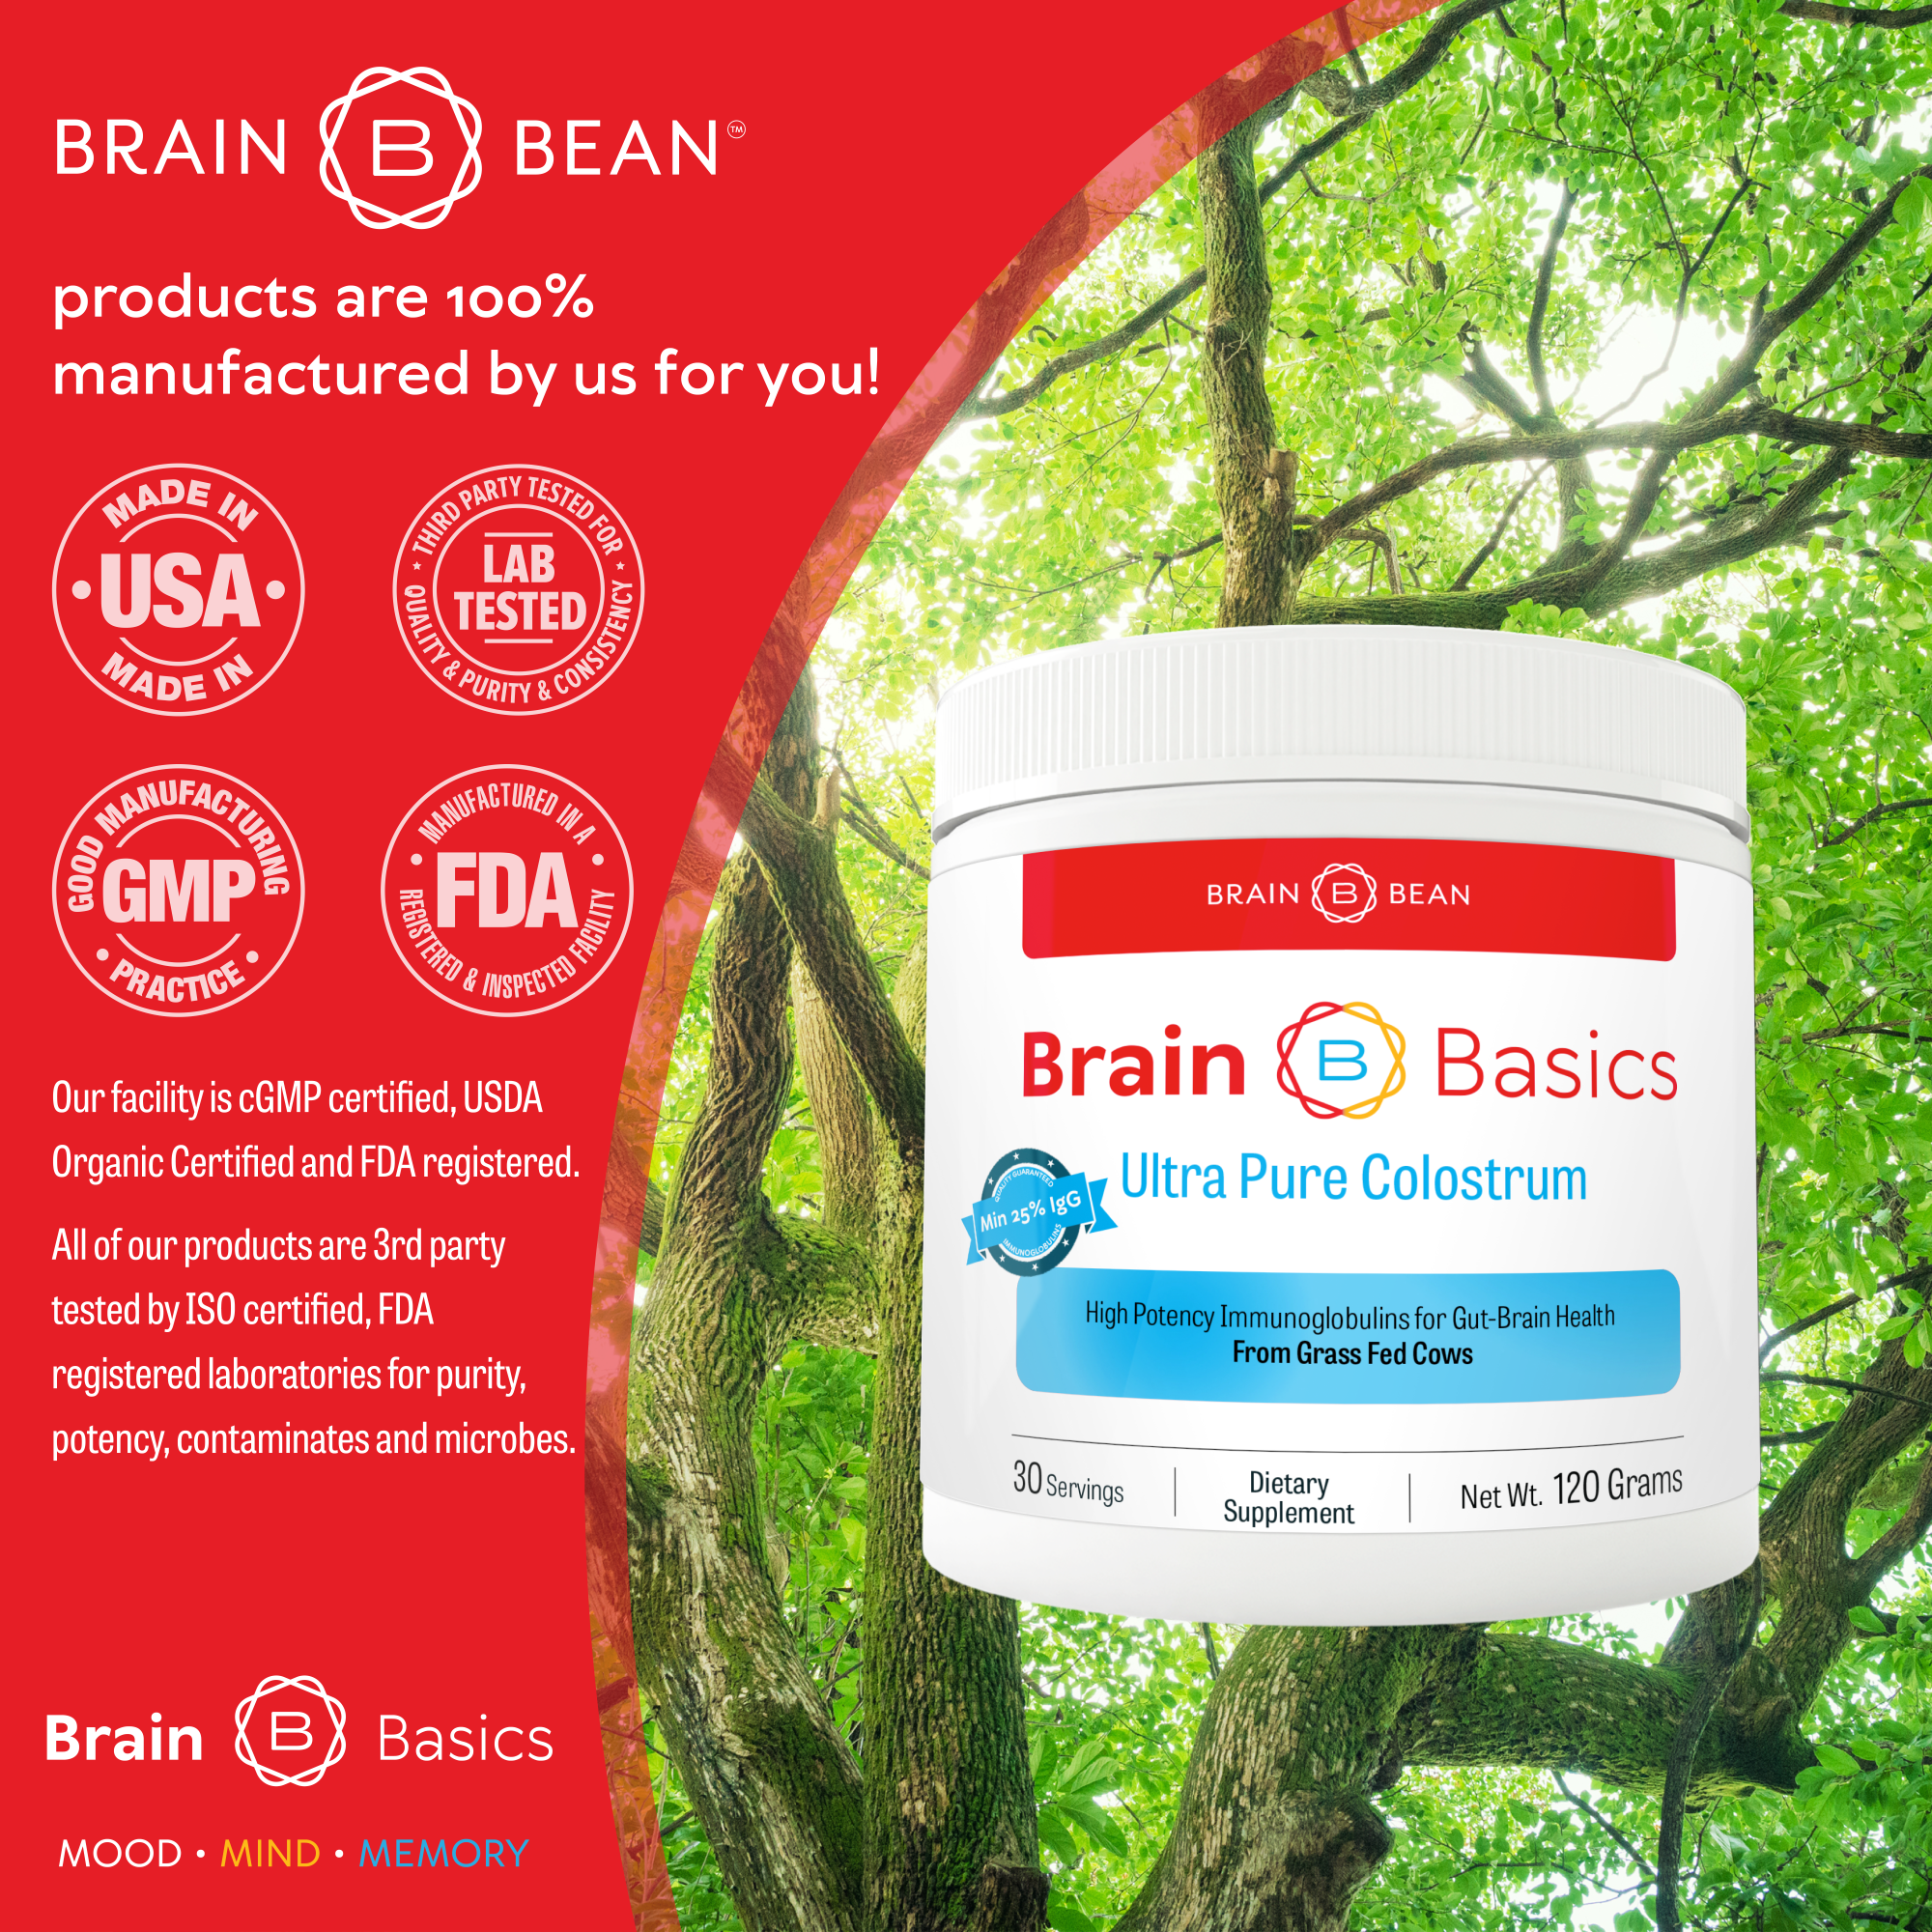 Brain Basics: Ultra Pure Colostrum